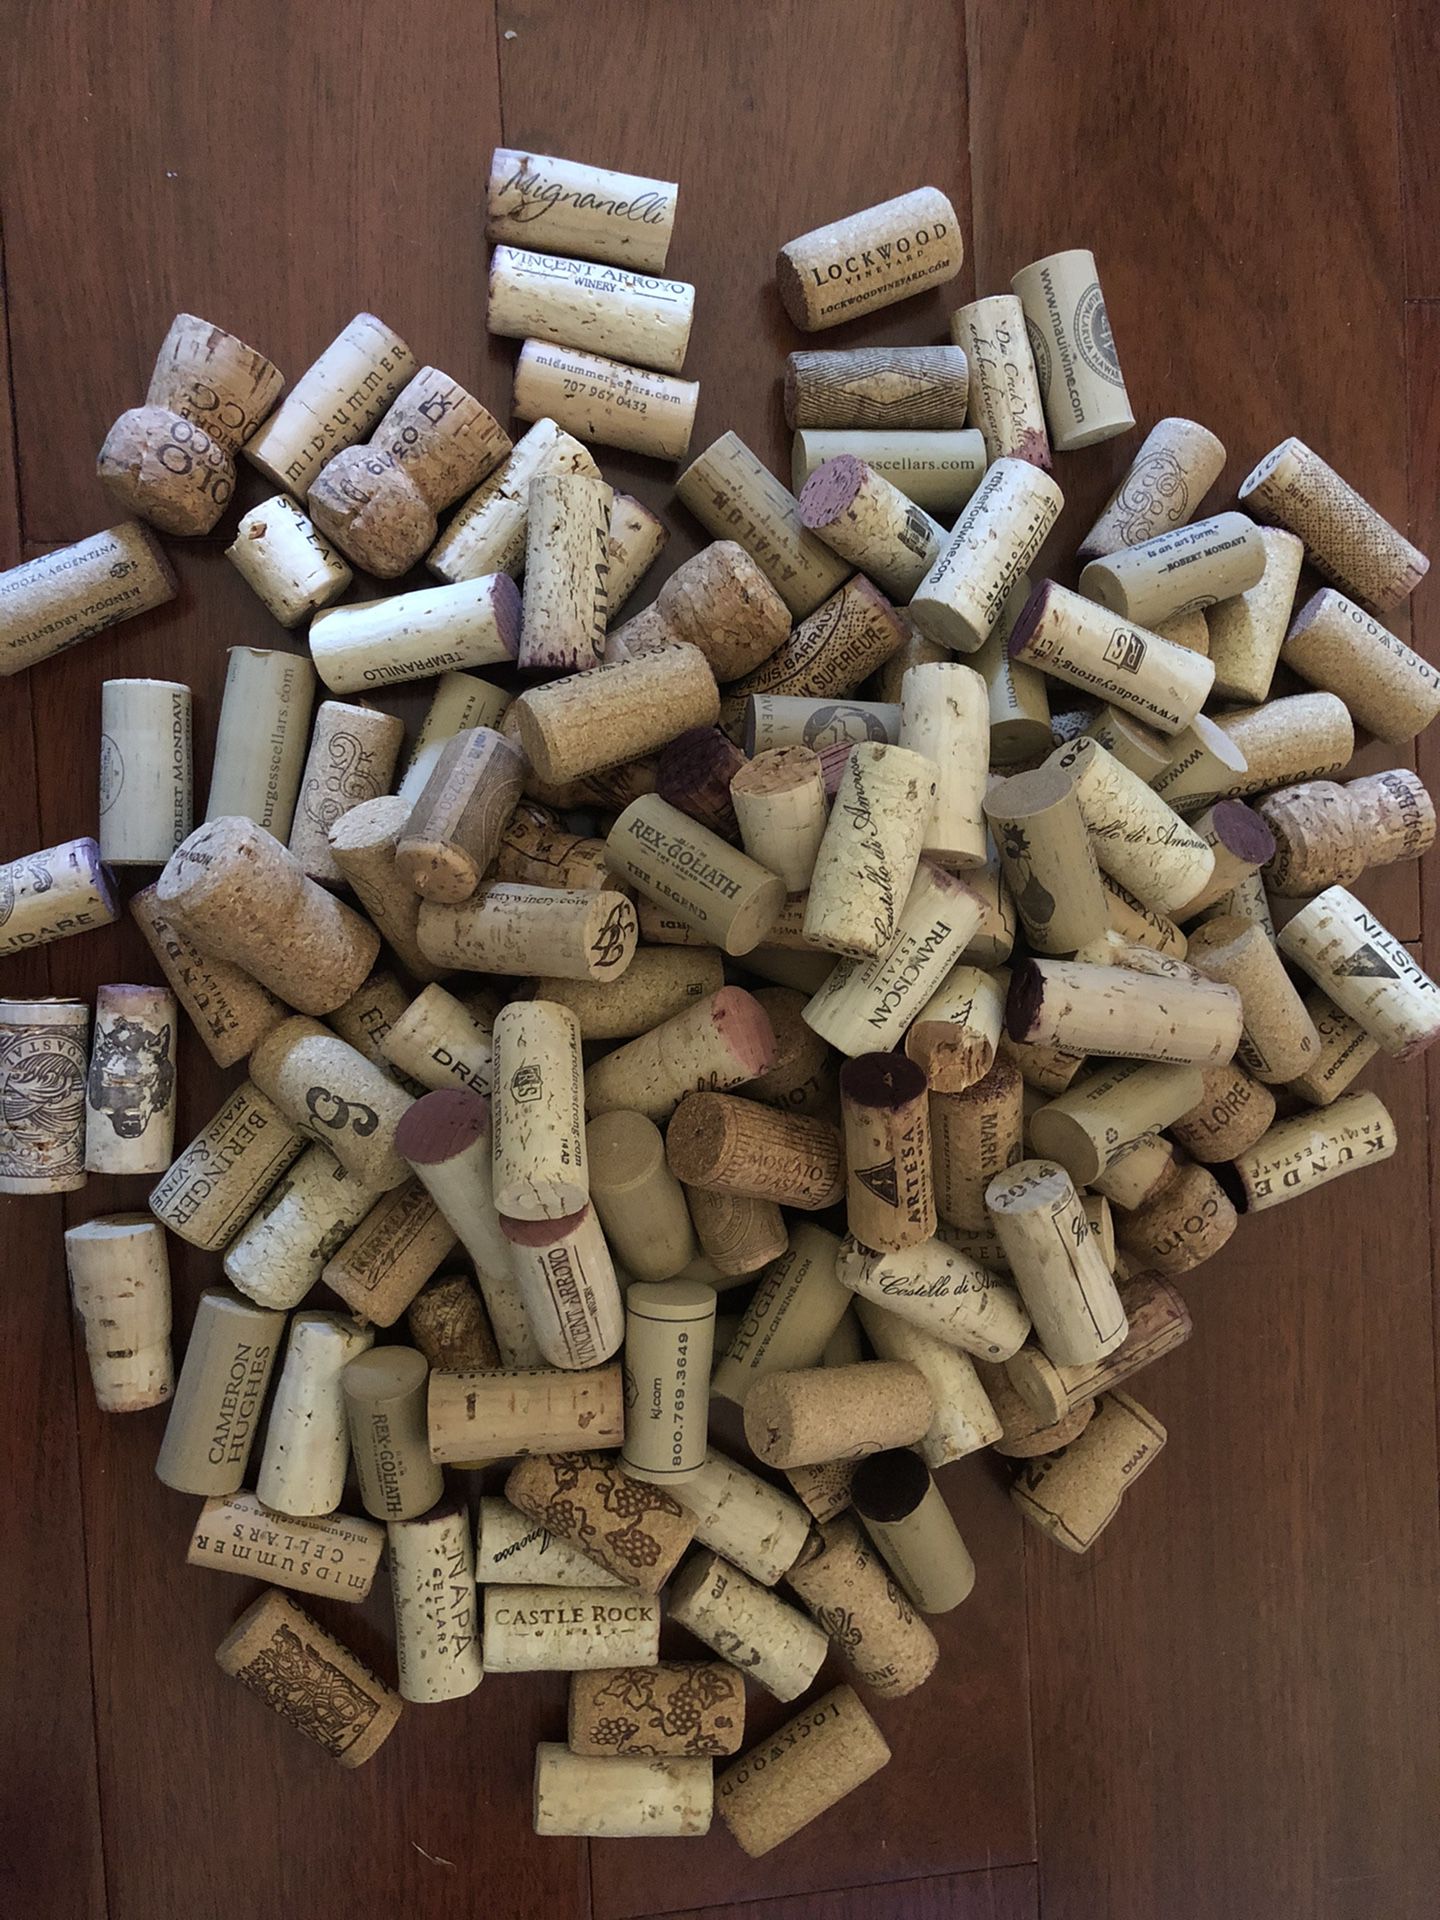 140 Premium Recycled Wine Corks